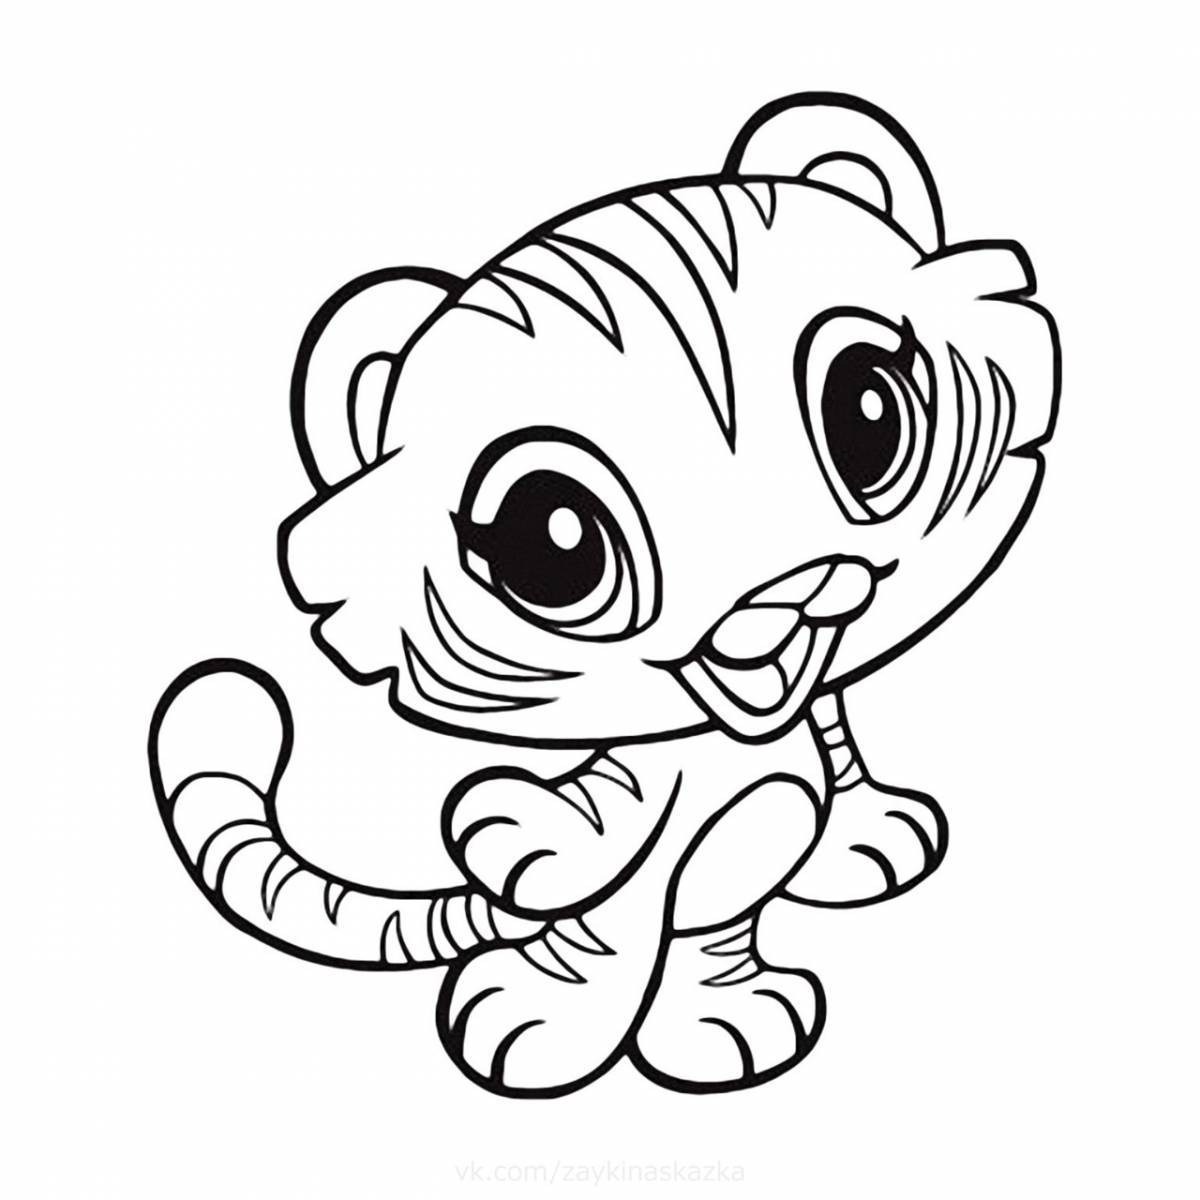 Vibrant tiger cub coloring page